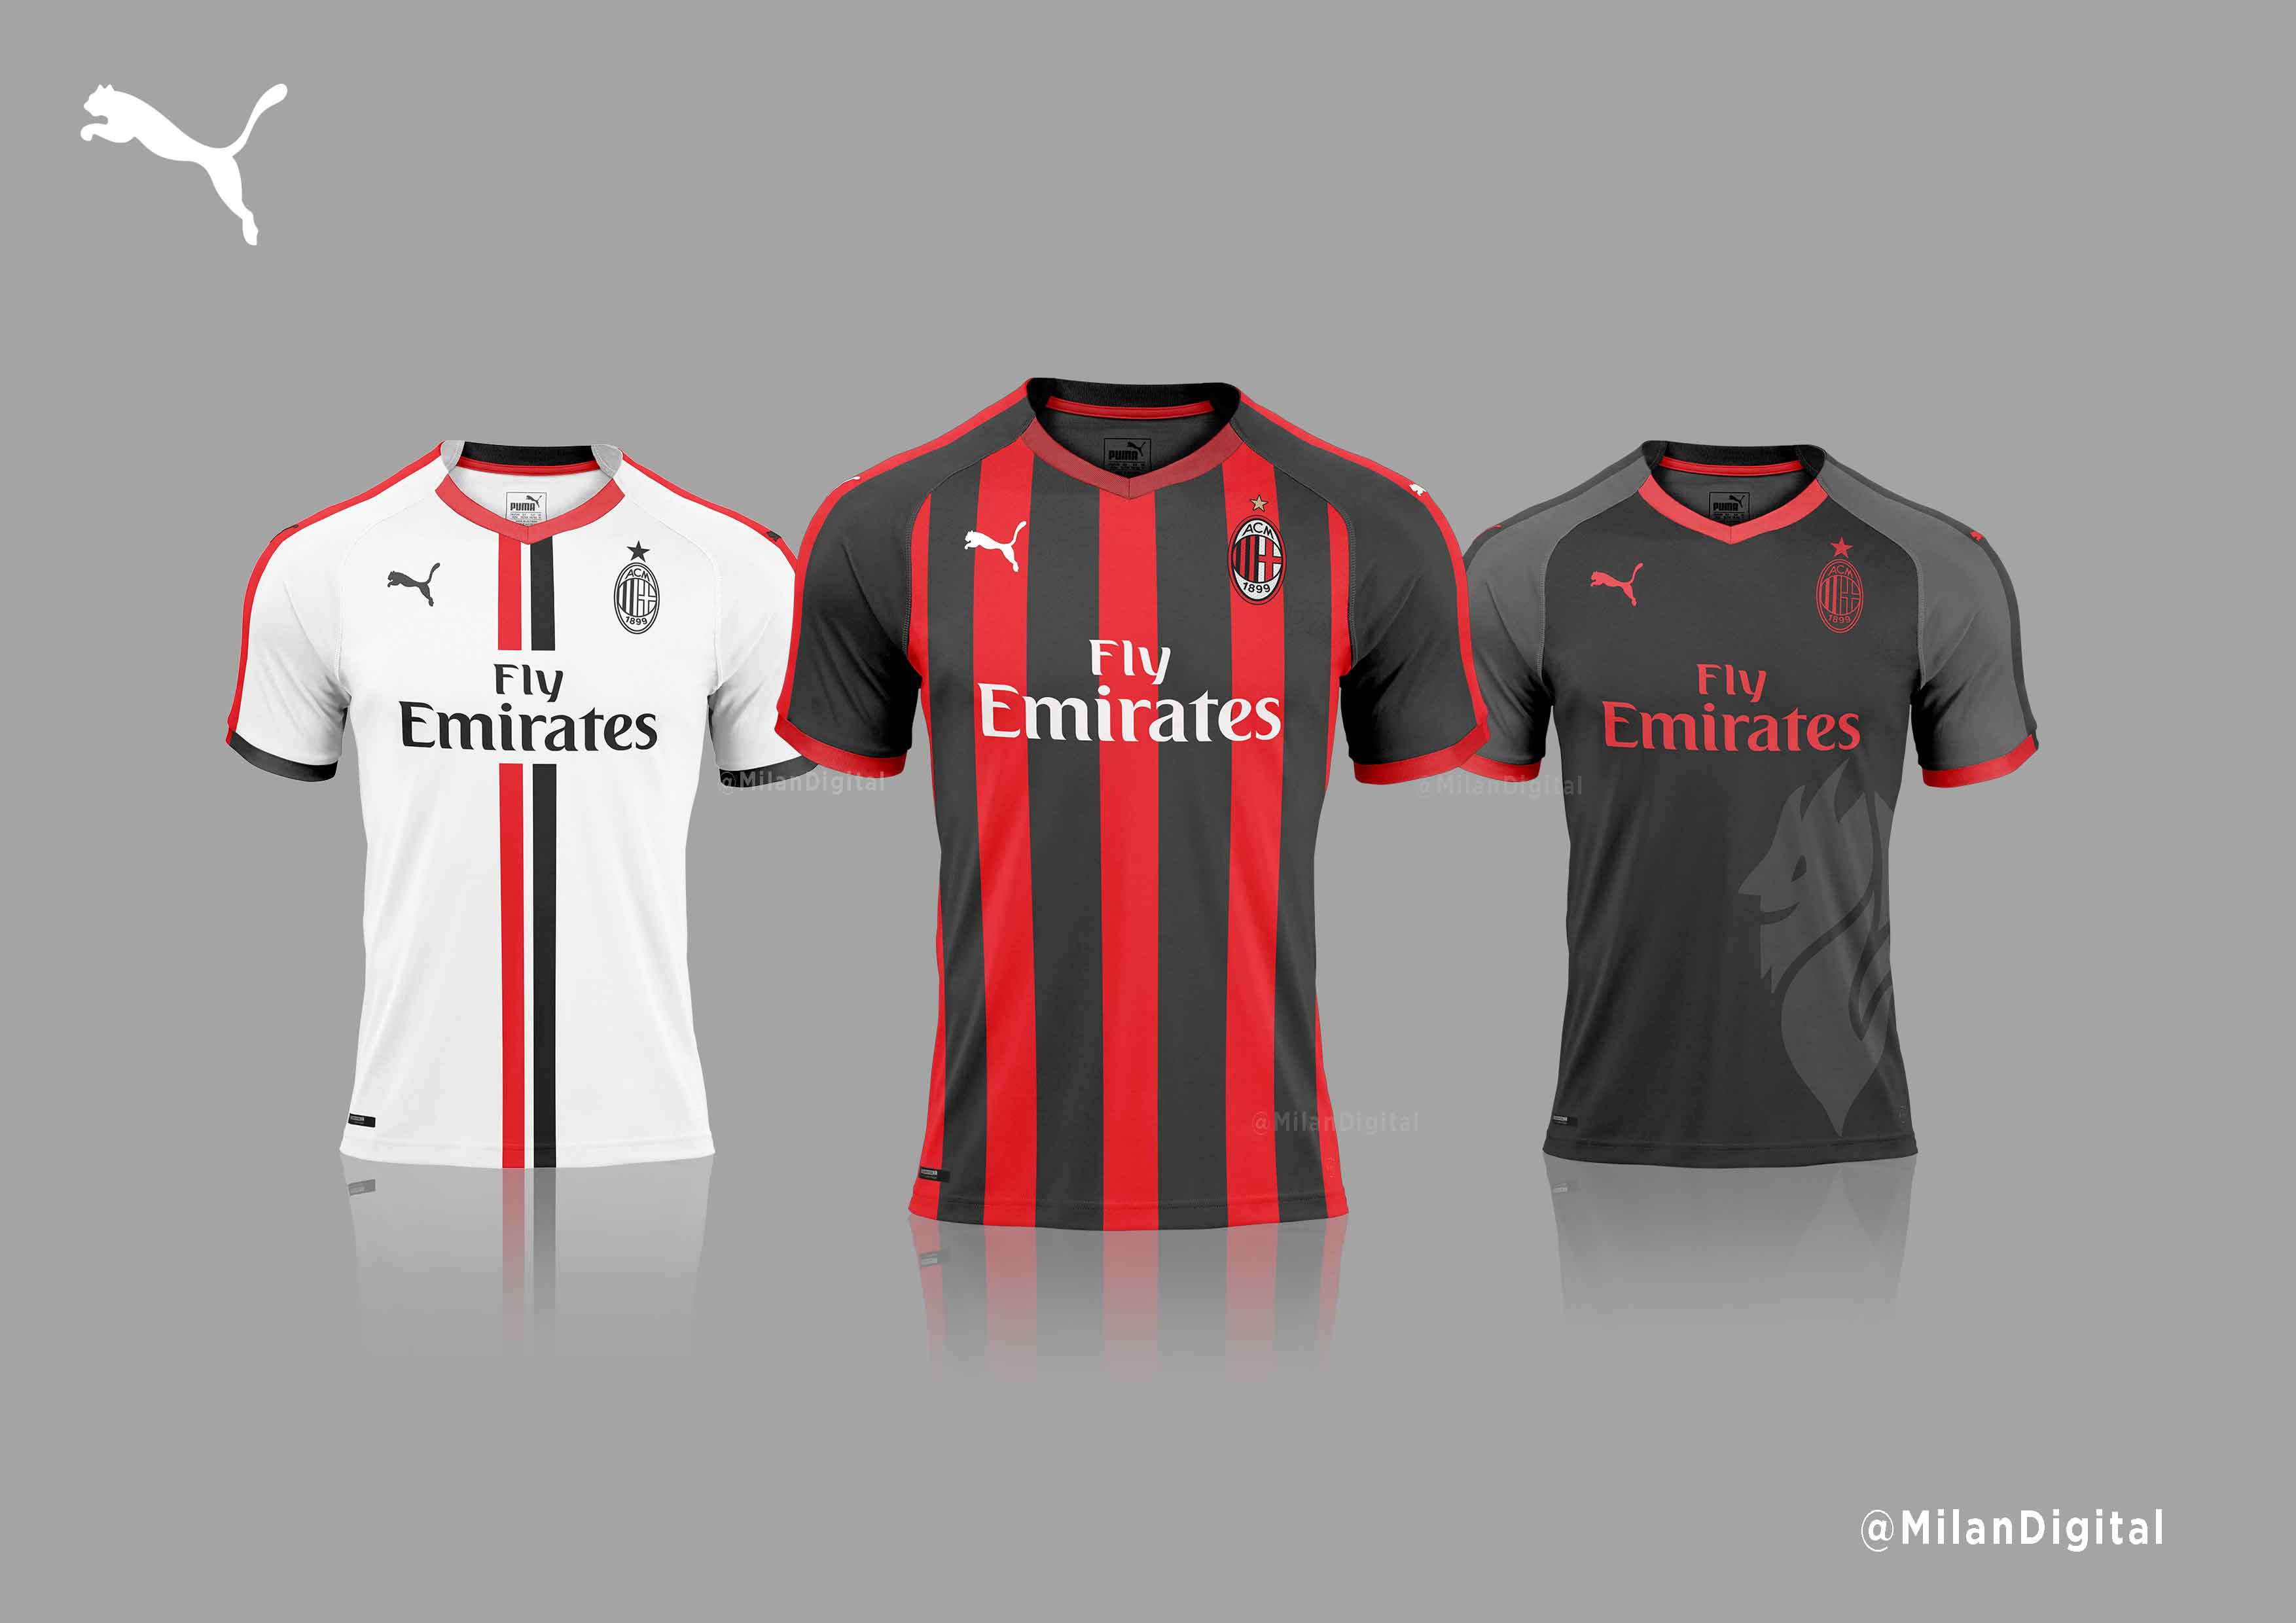 Milan Digital 🇮🇹 🏆 #19 on "#ACMilan #puma #evoKnit Kits Concept by Milan @MilanDigital #pumafootball #ForzaMilan https://t.co/fwe2Rb8H8N" / Twitter